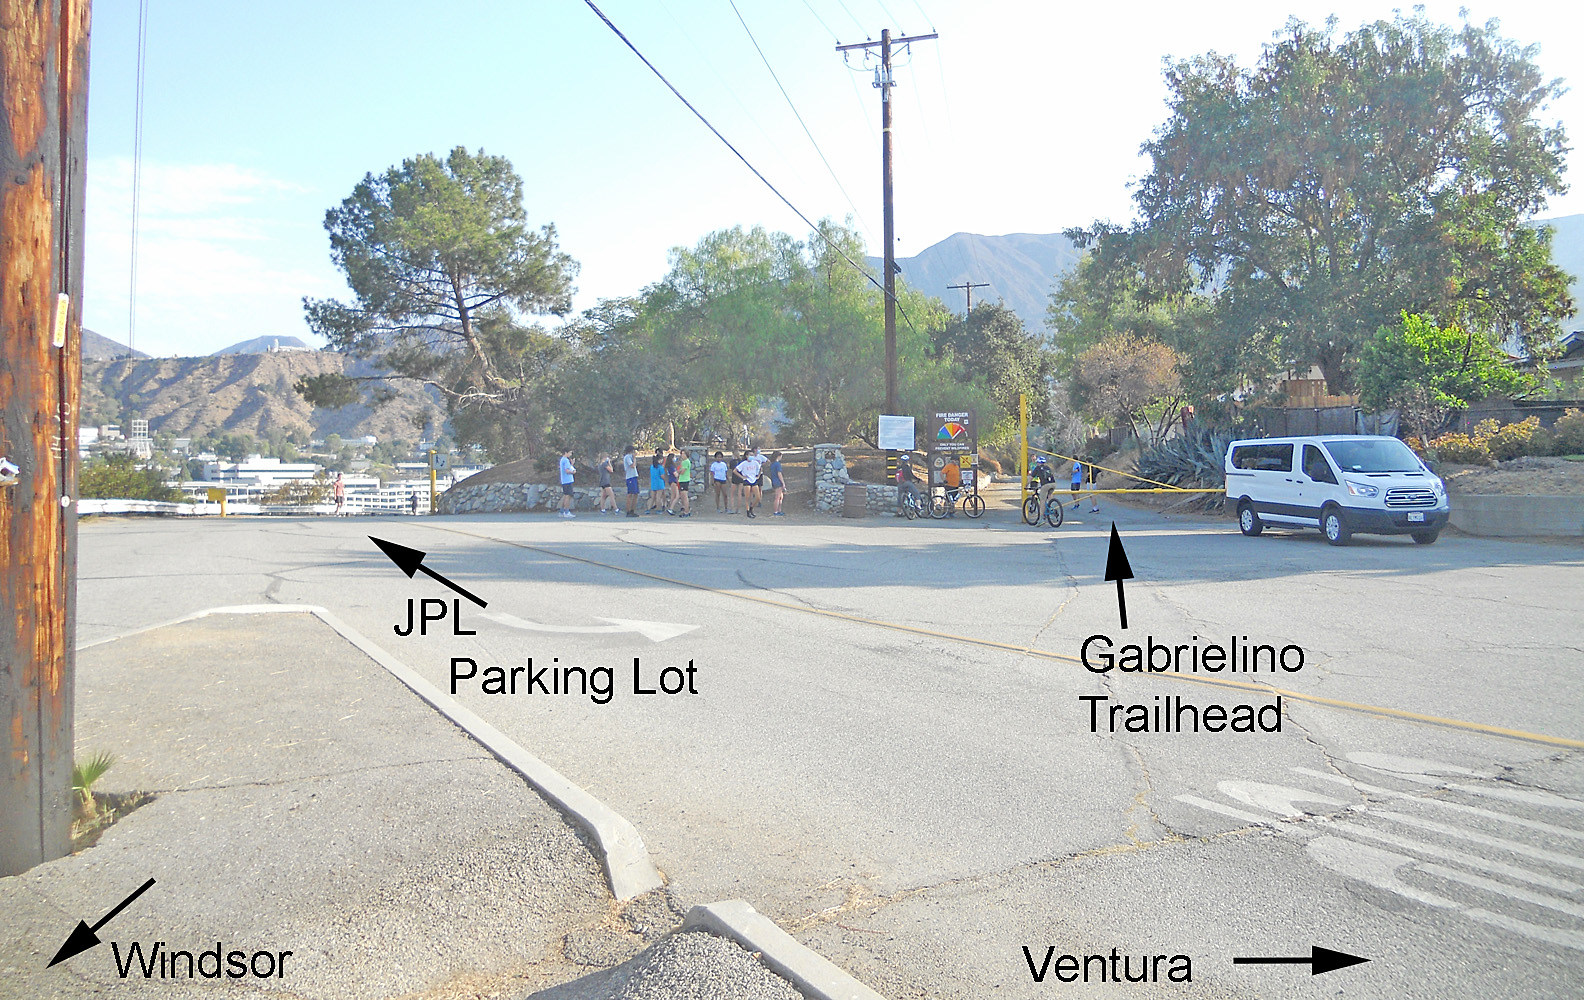 Gabrielino Trailhead / JPL East Parking Lot